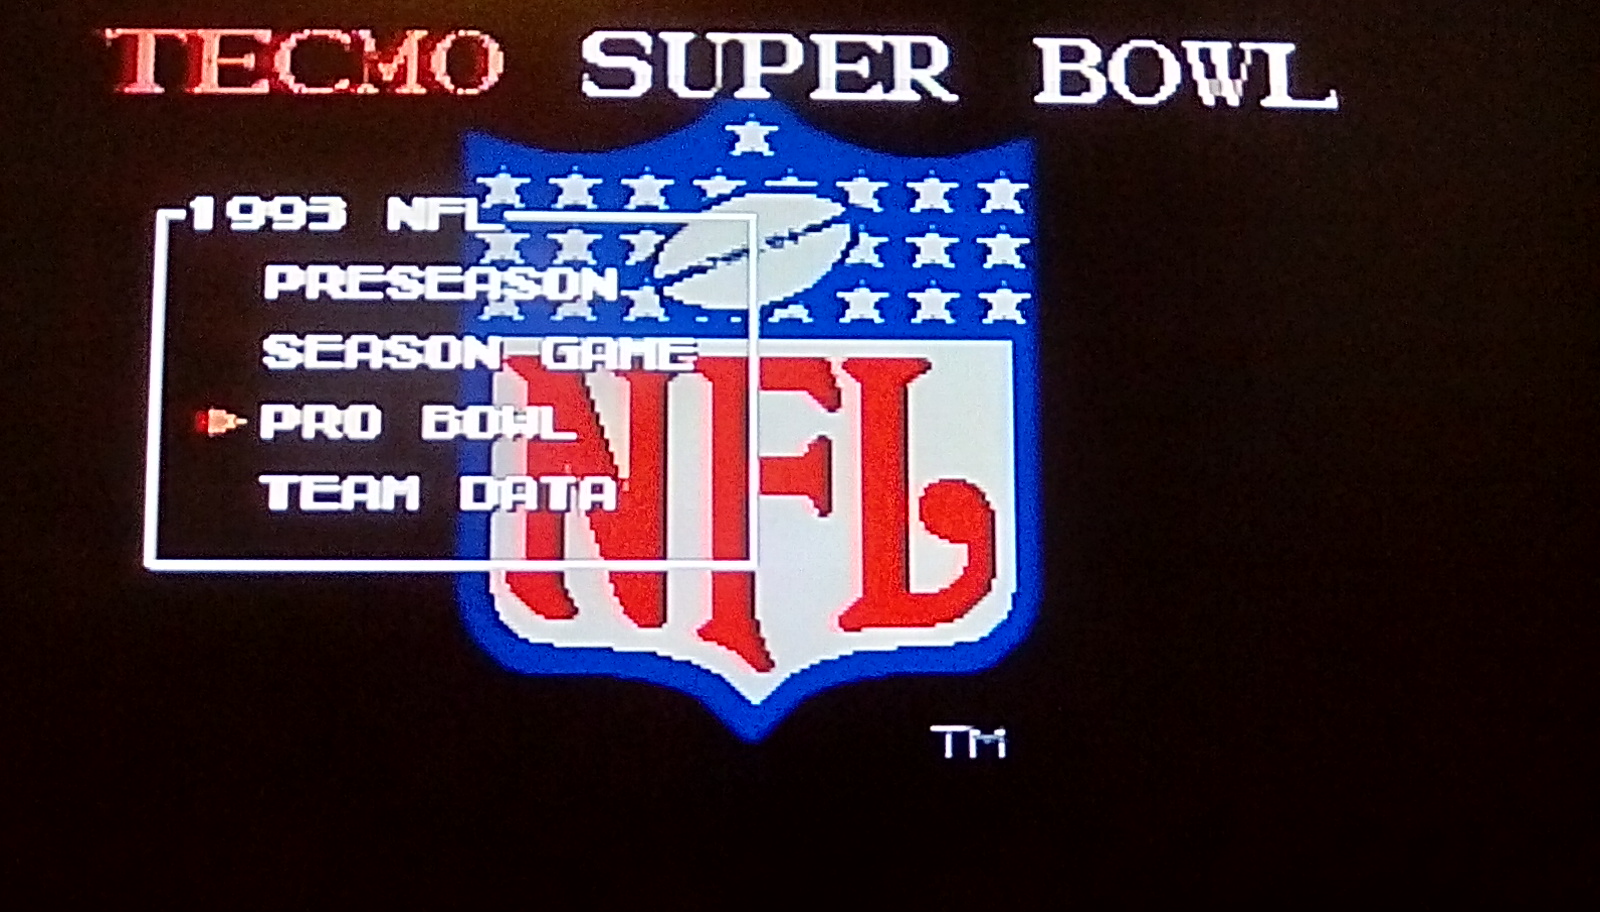 JML101582: Tecmo Super Bowl [Most Total Yards] [Pro Bowl] (Sega Genesis / MegaDrive Emulated) 574 points on 2019-01-19 19:16:48